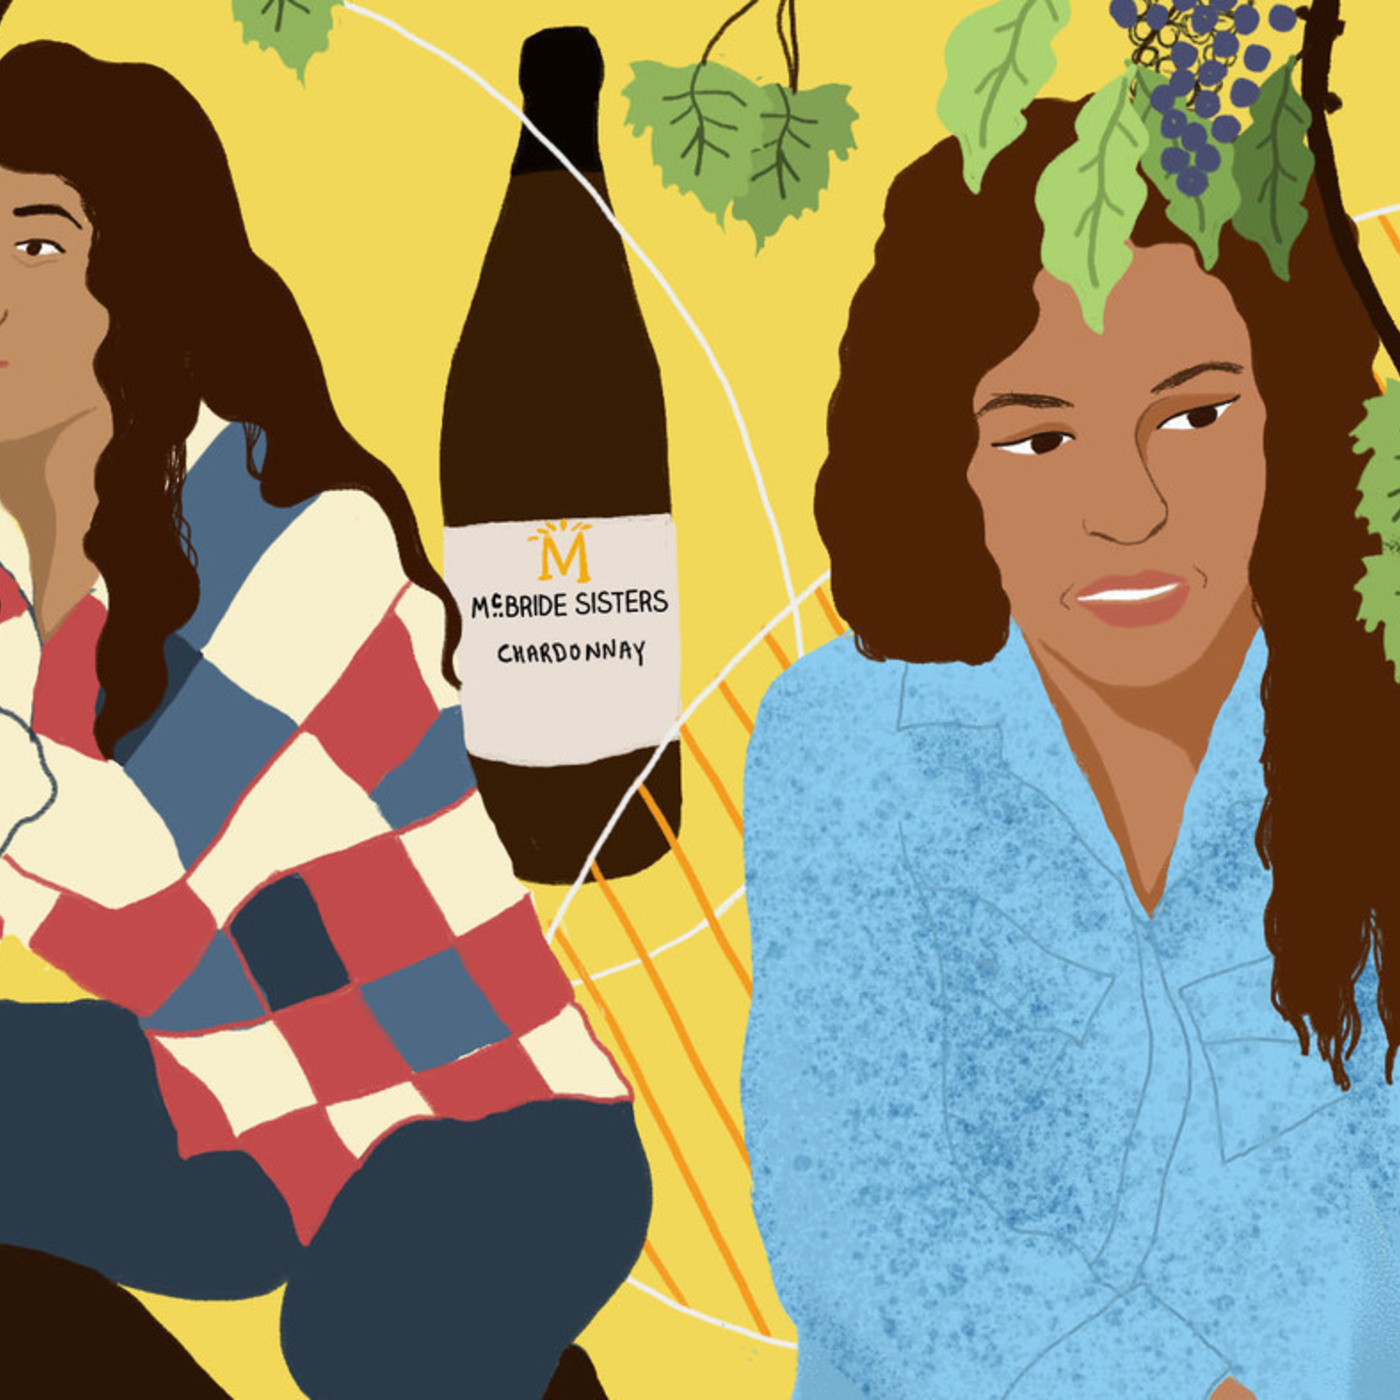 McBride Sisters Wine (Part 2 of 2): Robin McBride and Andréa McBride John